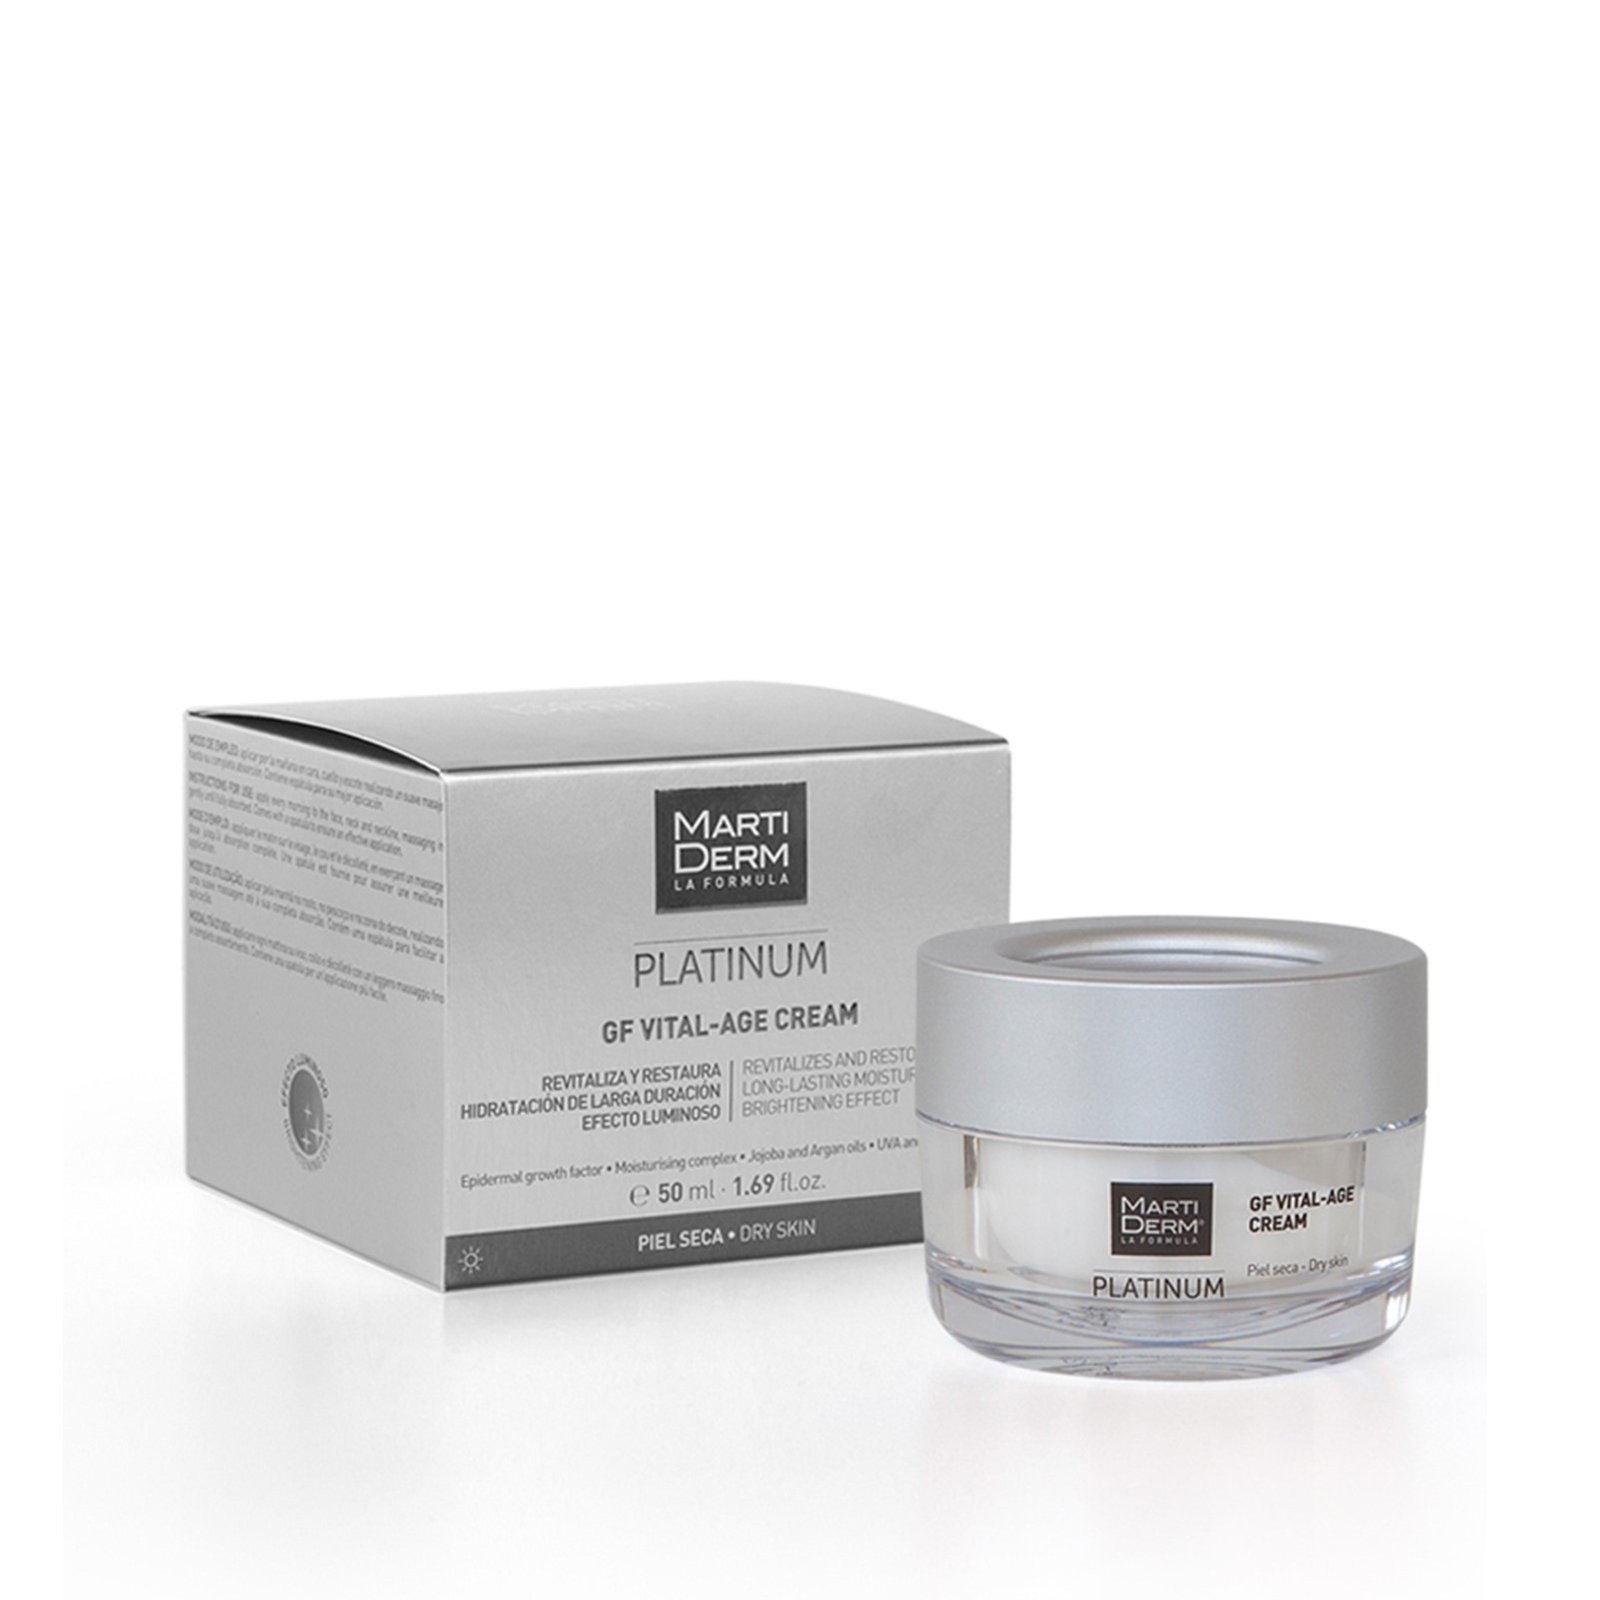 Martiderm Platinum GF Vital-Age Cream Dry Skin 50ml (1.69fl oz)